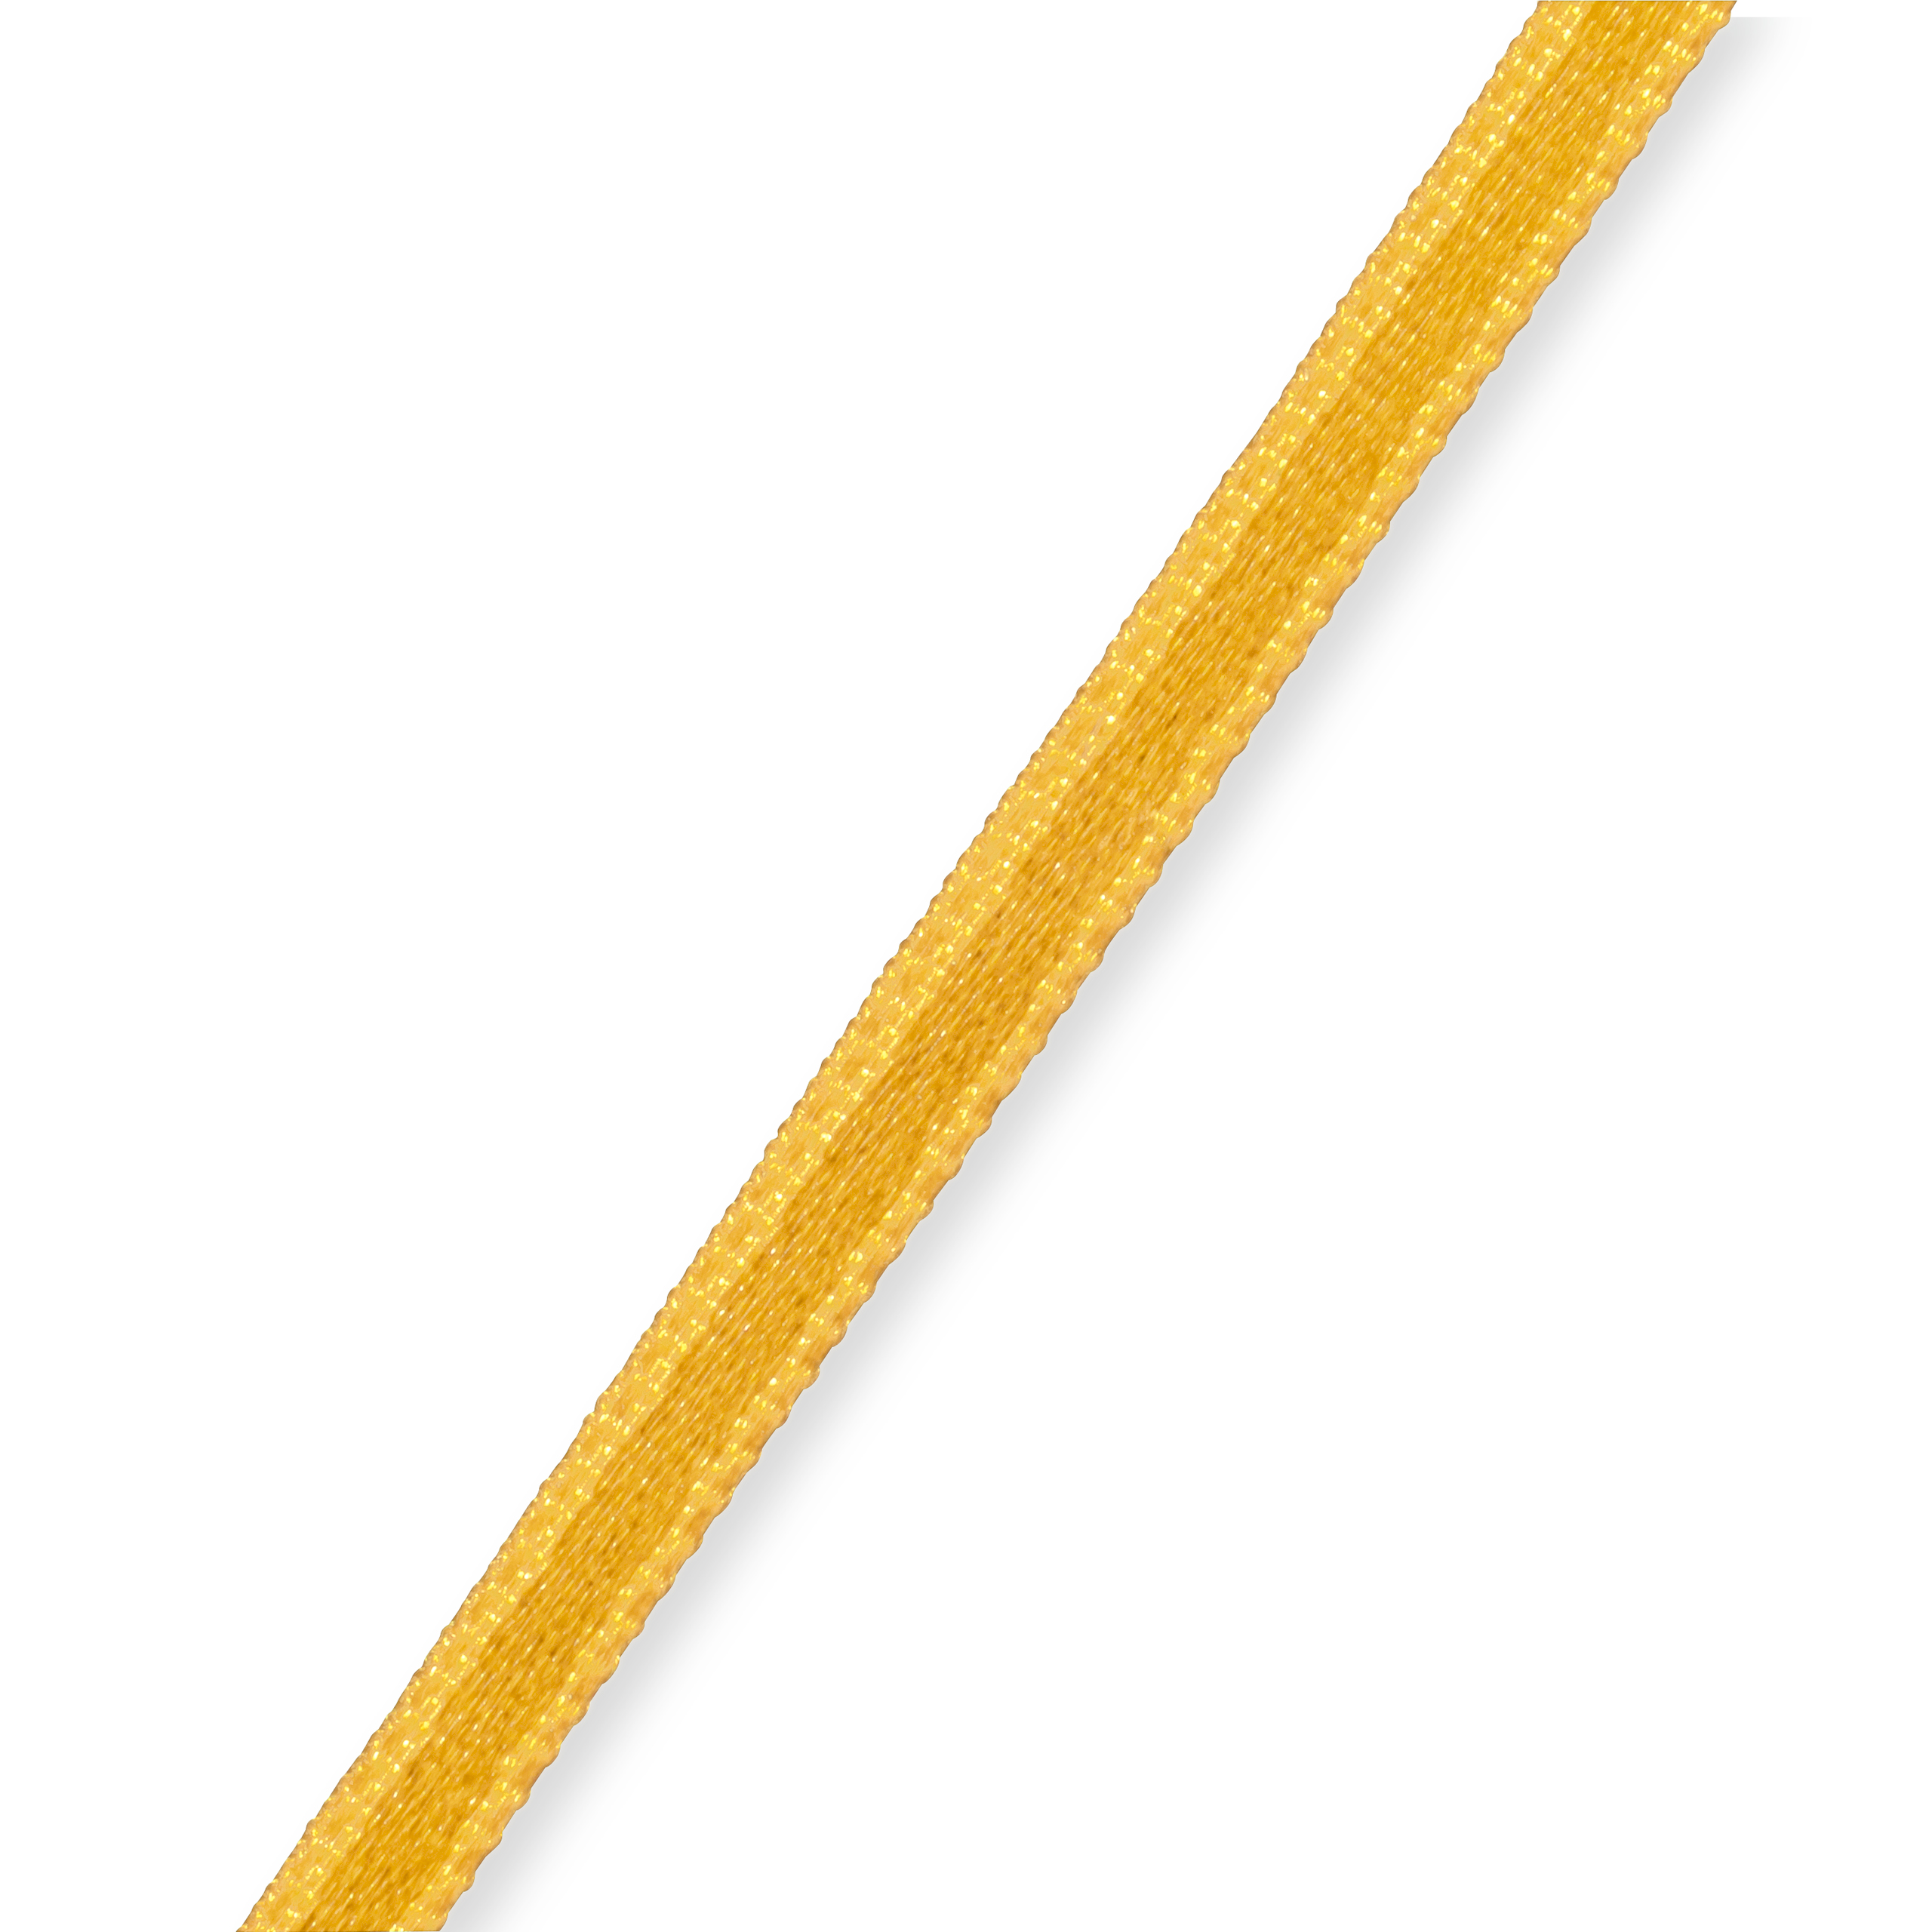 Satin ribbon 3 mm yellow, 50 m